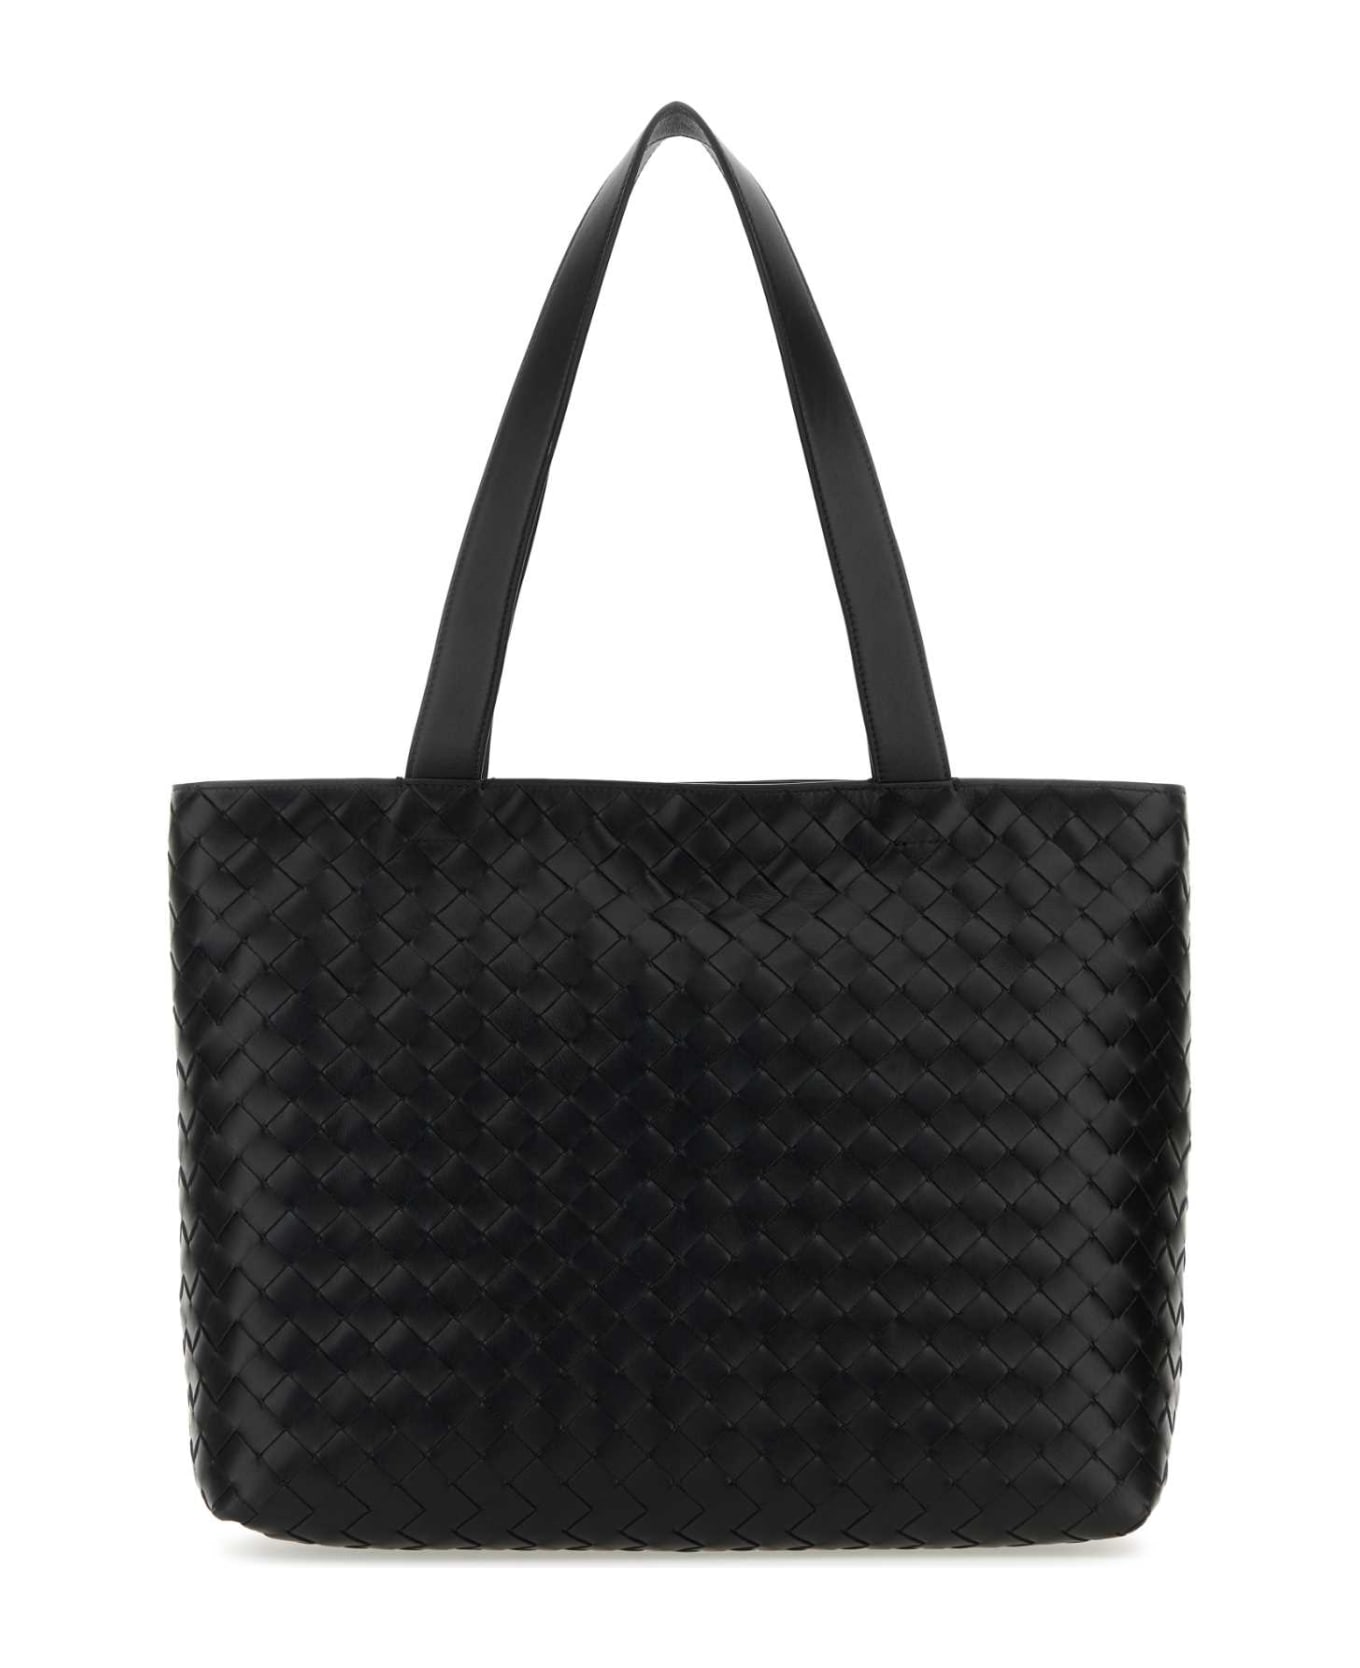 Bottega Veneta Black Leather Small Intrecciato Shopping Bag - BLACKSILVER